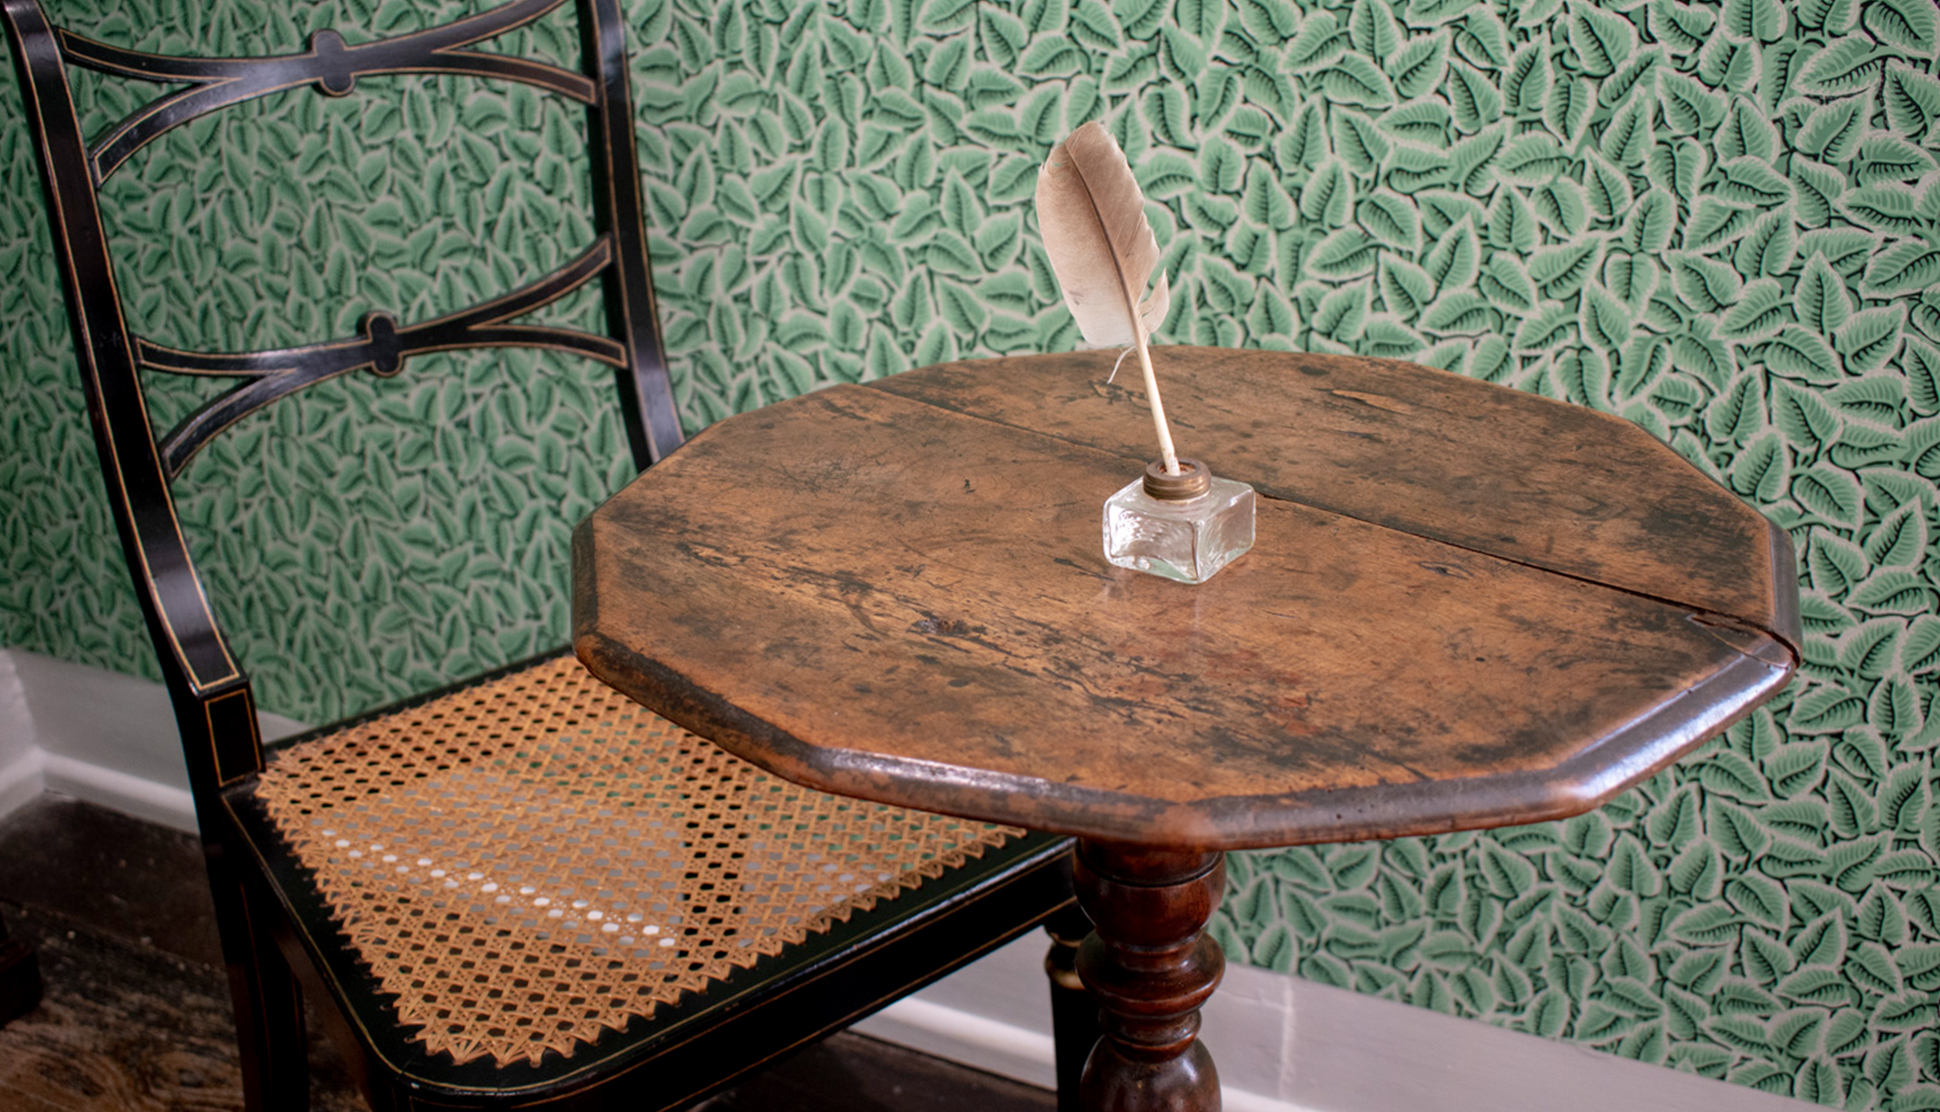 Jane Austen's Writing Table at Jane Austen's House